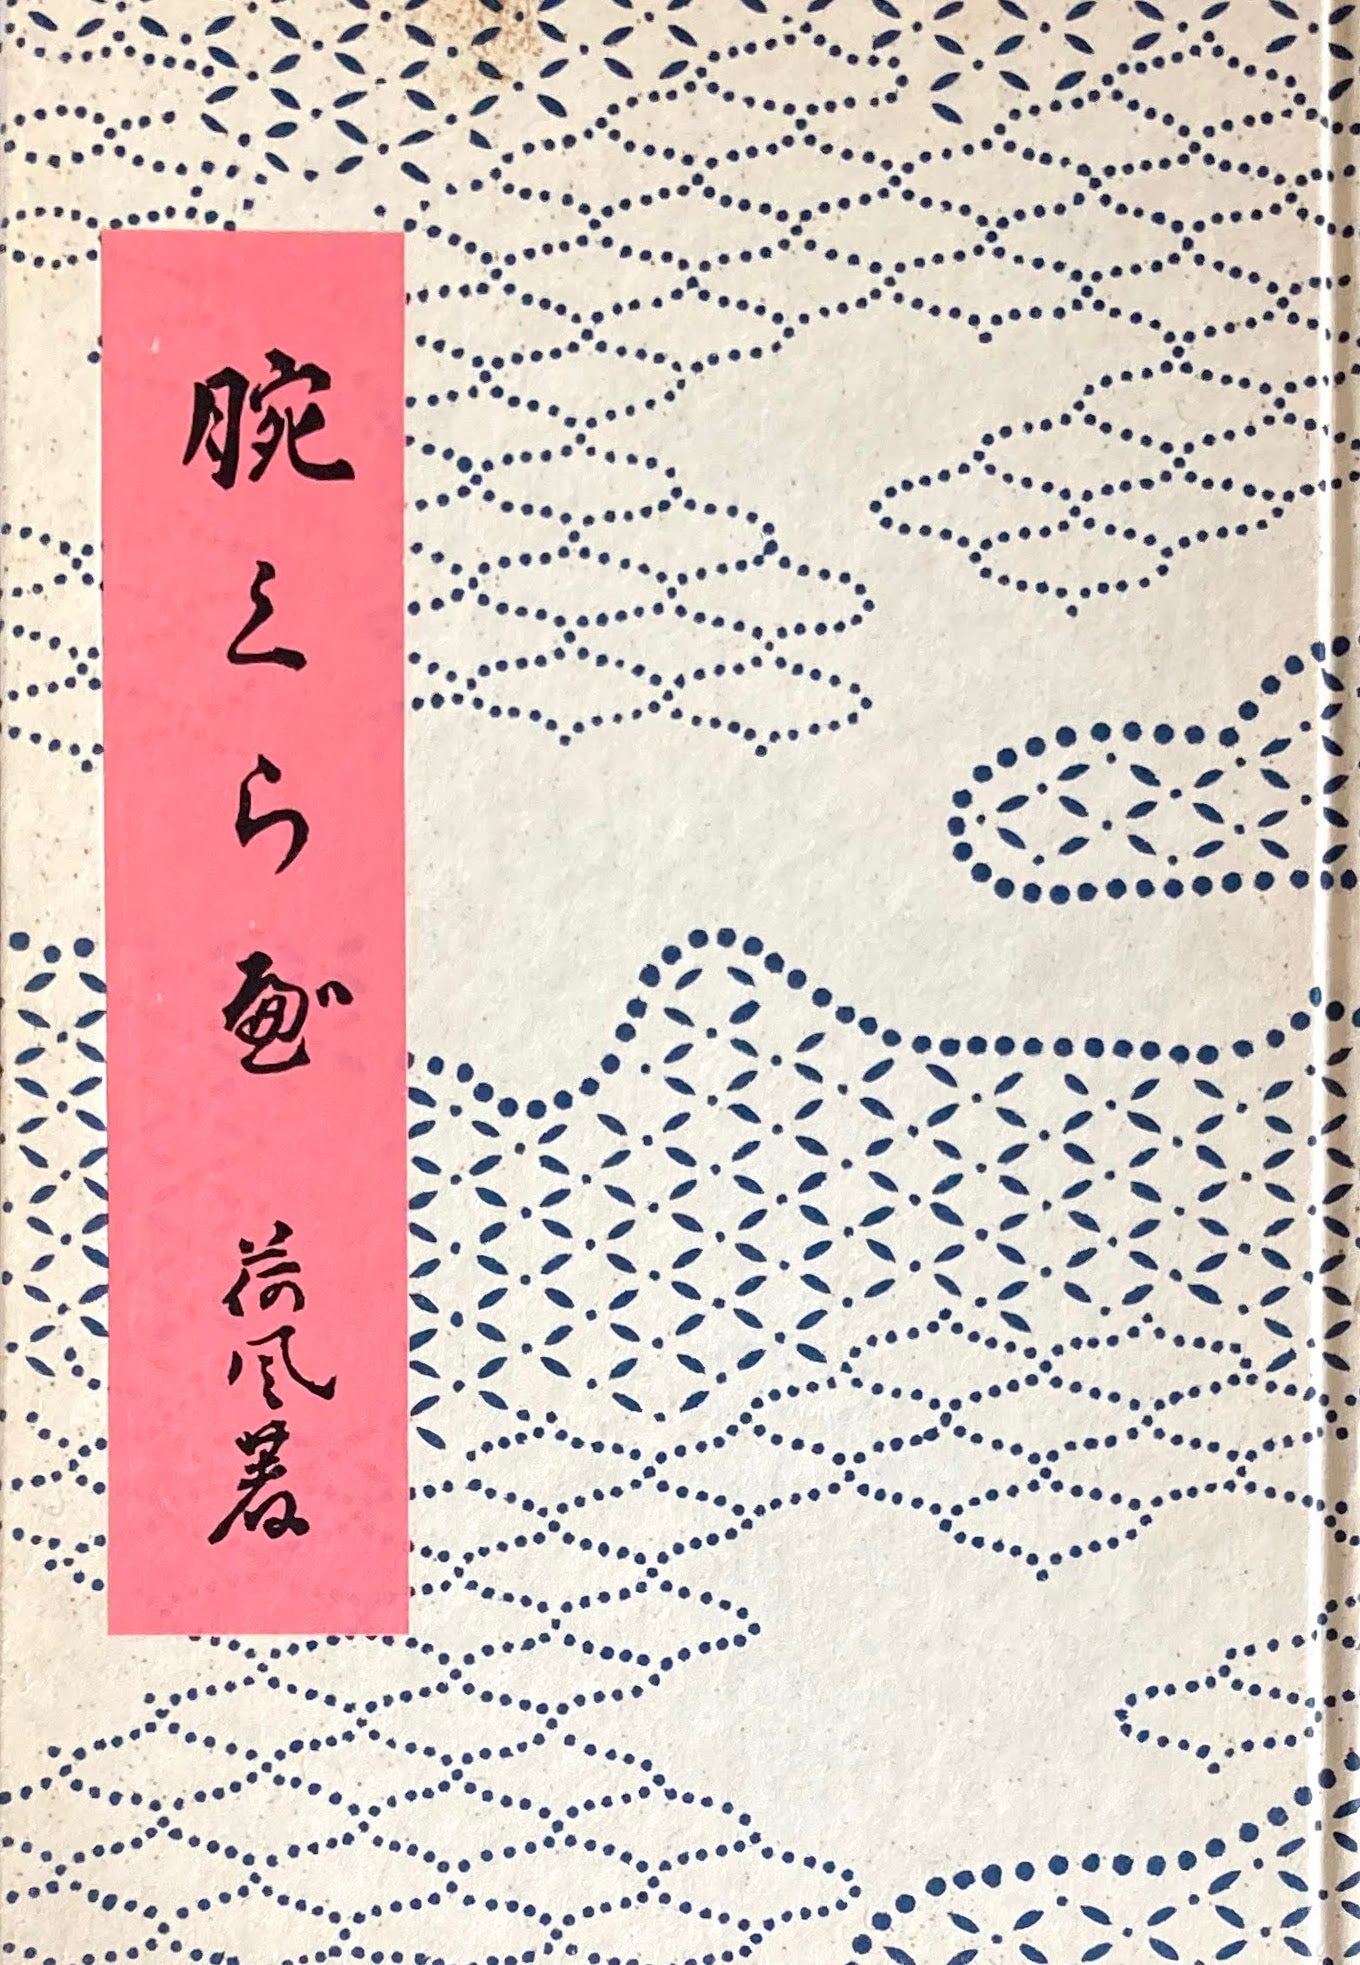 腕くらべ 永井荷風 精選名著複刻全集 近代文学館 昭和49年 – smokebooks shop